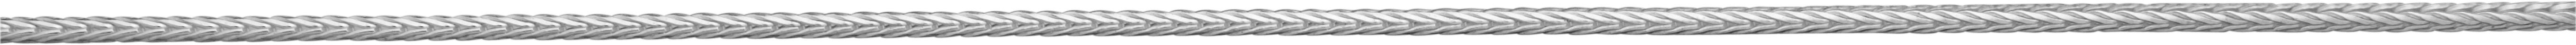 vossestaart ketting zilver 925/- Ø 1,15mm